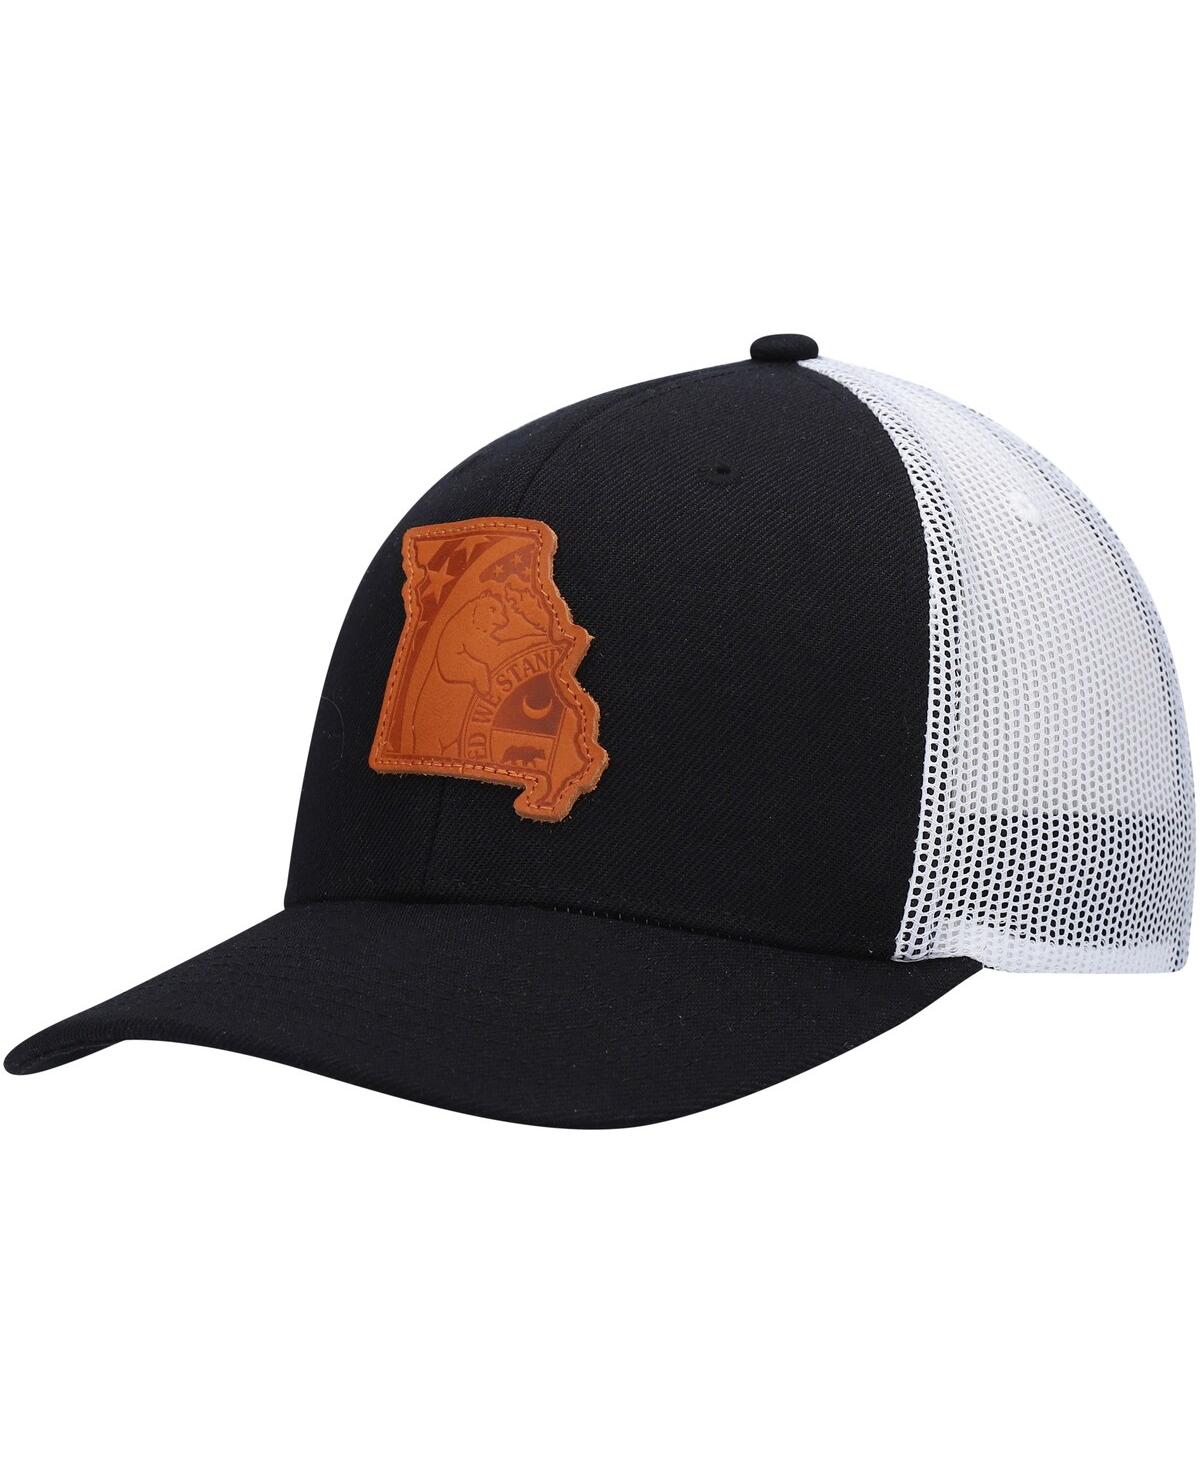 Local Crowns Men's  Black Missouri Leather State Applique Trucker Snapback Hat